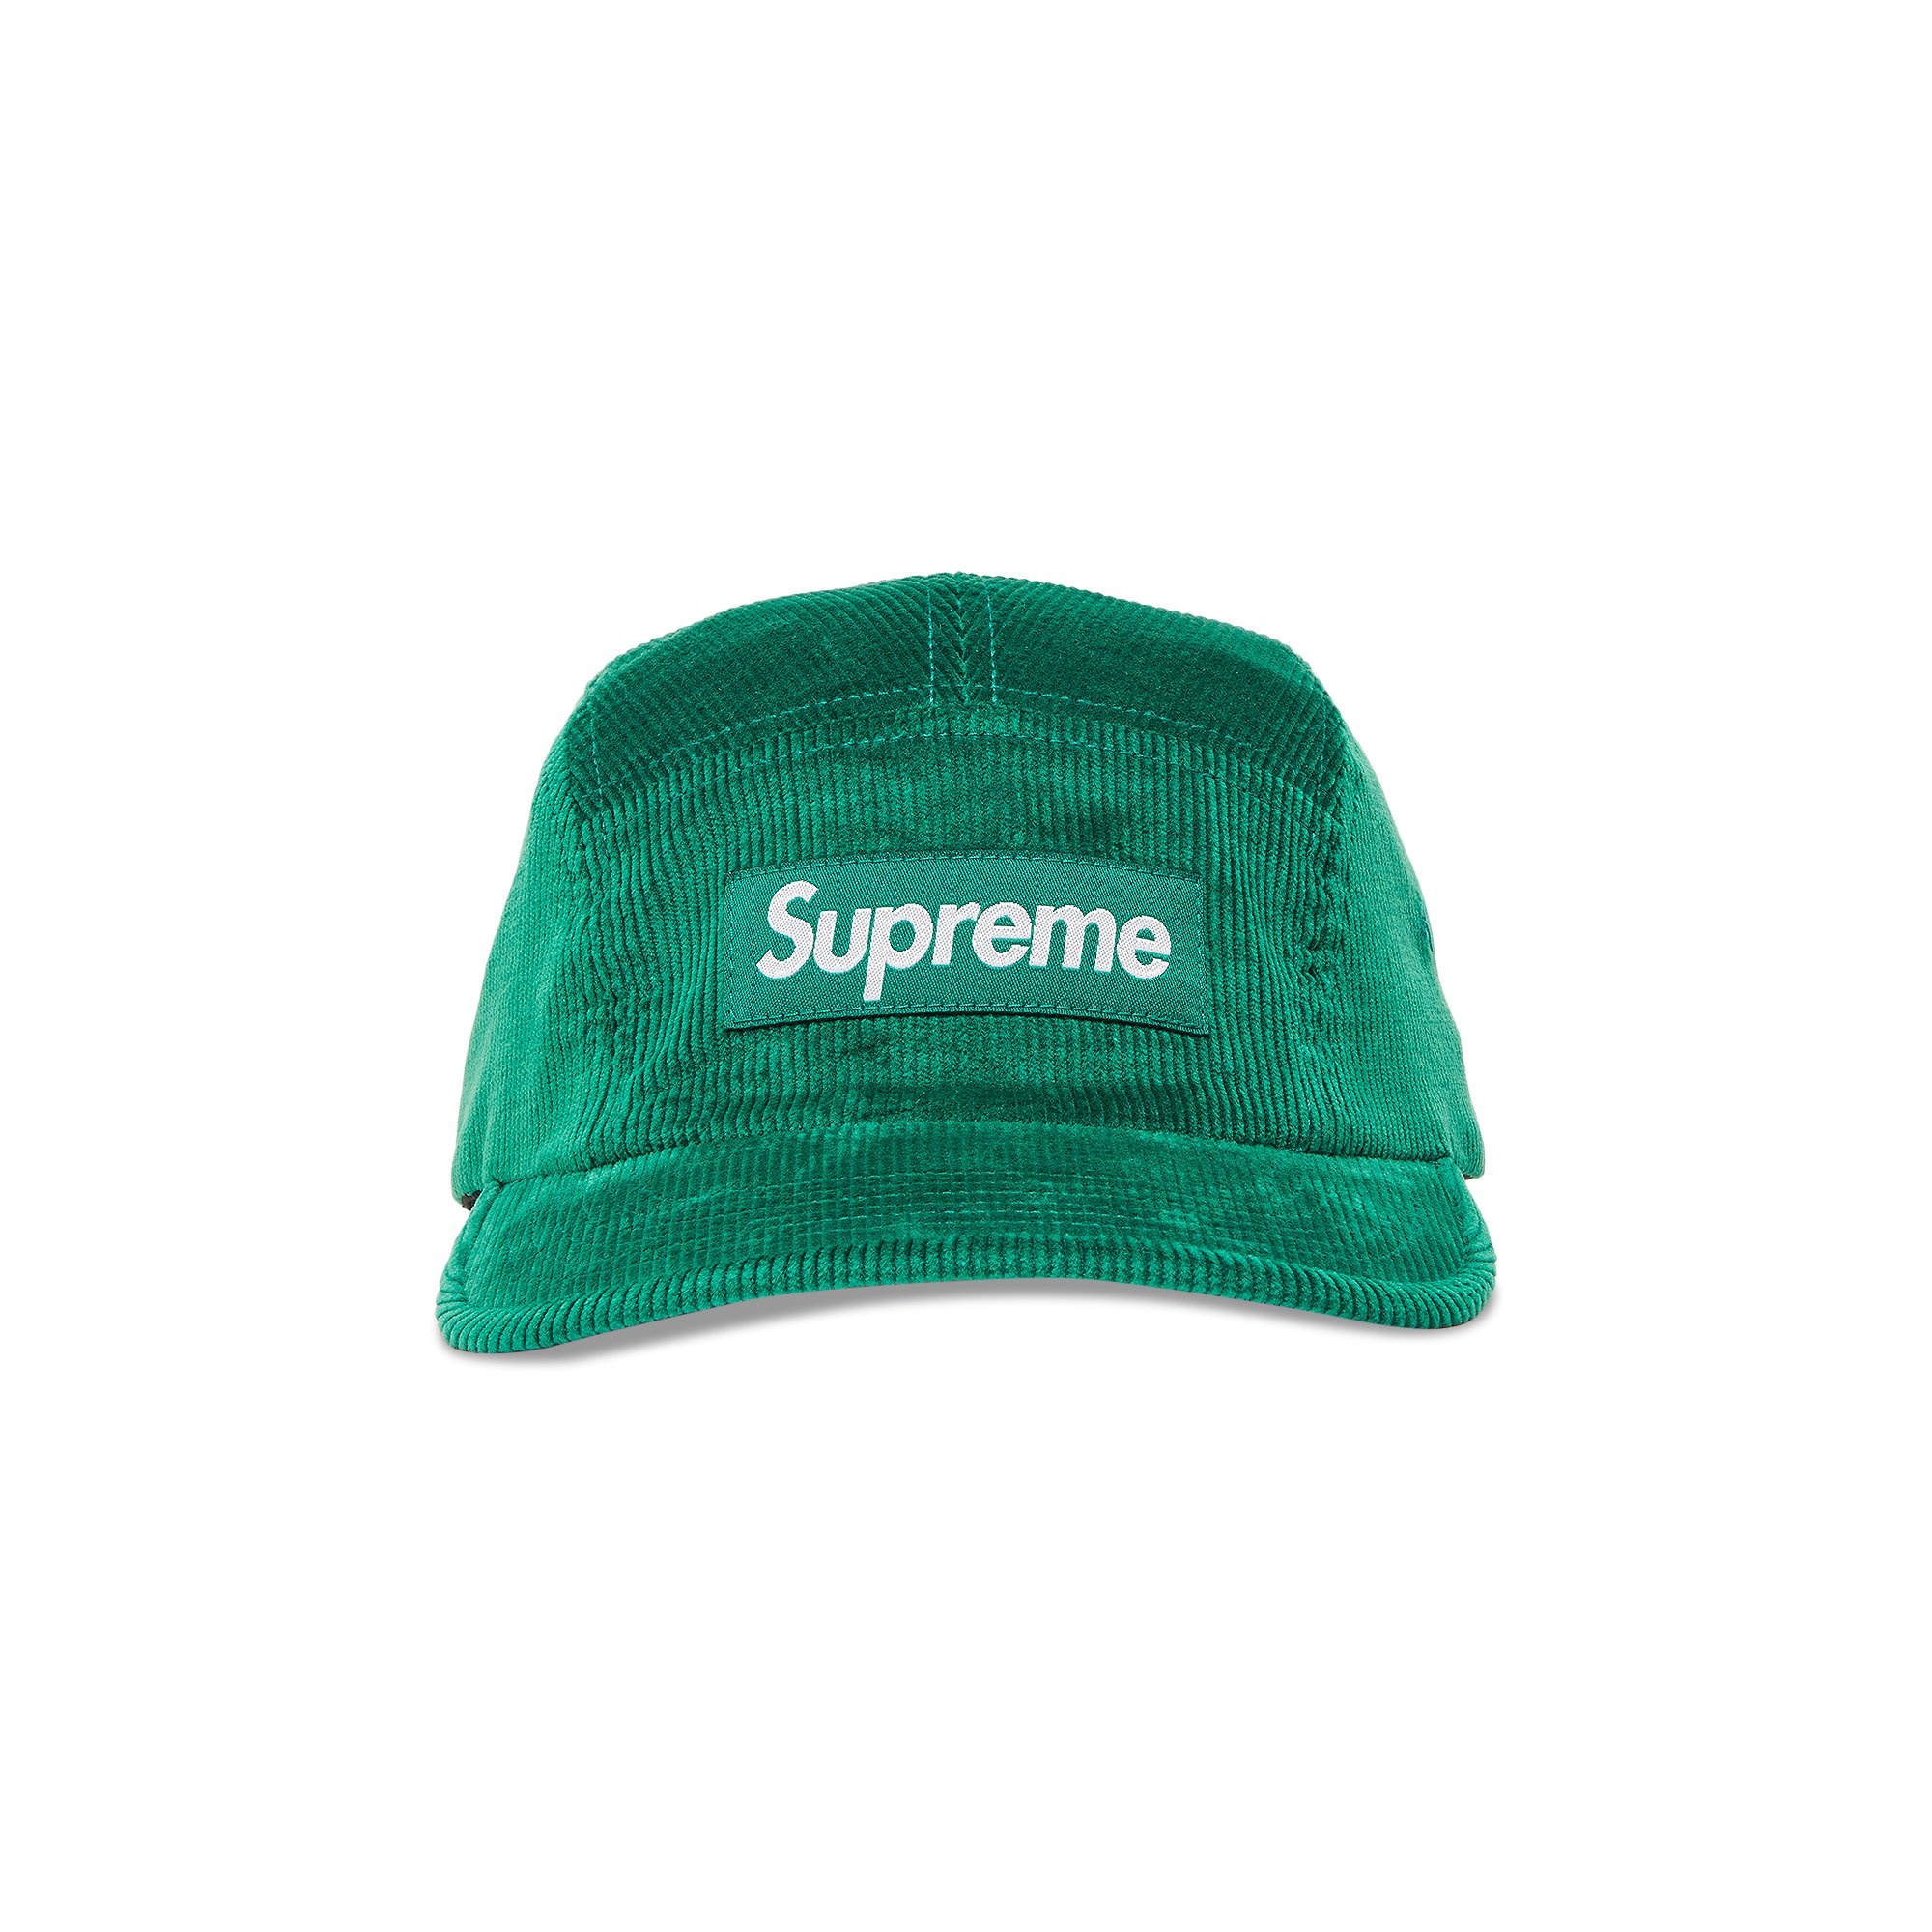 Вельветовая кепка Supreme, зеленая